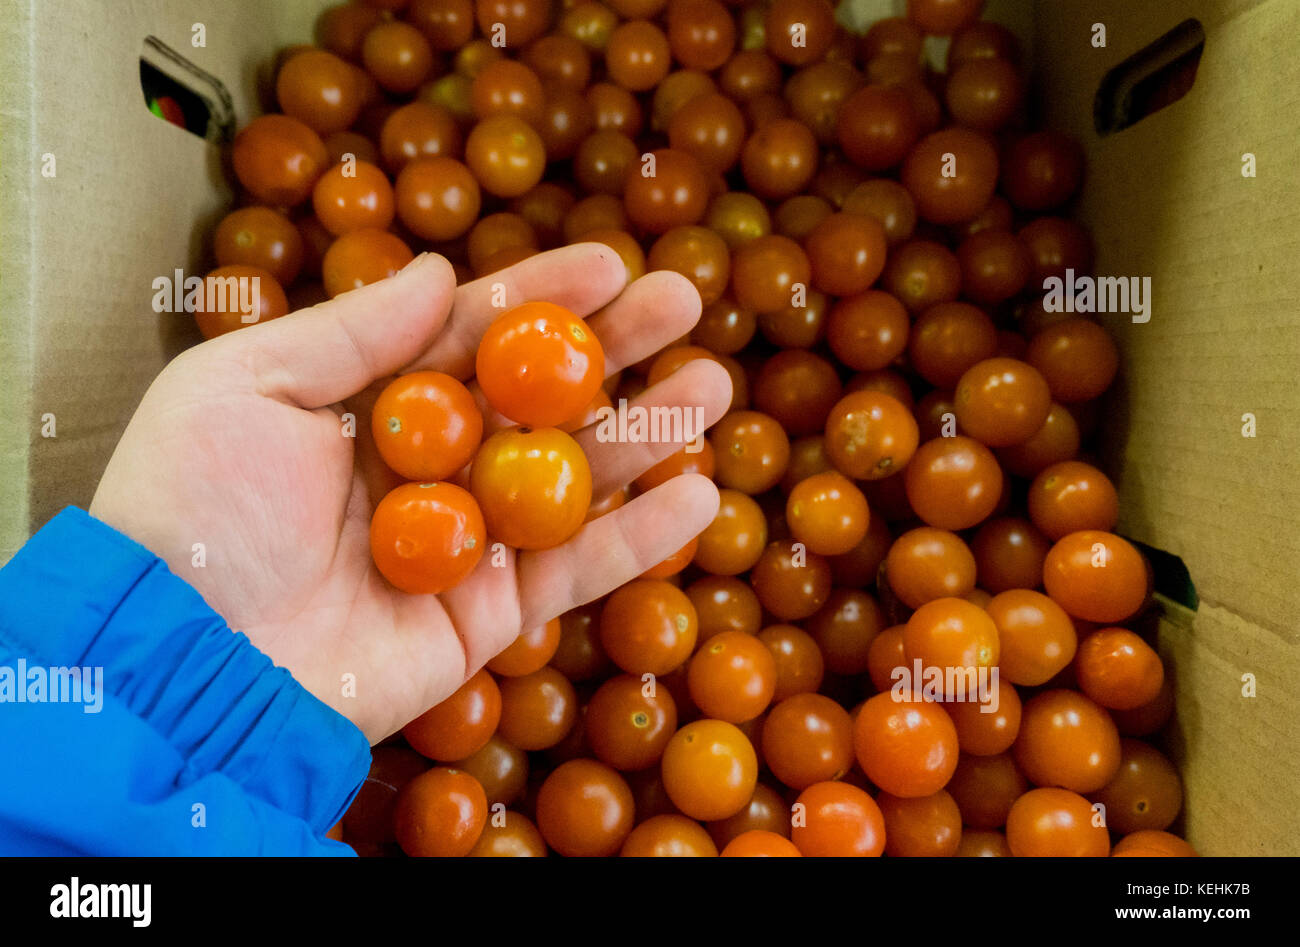 Hand holding tomatoes Stock Photo